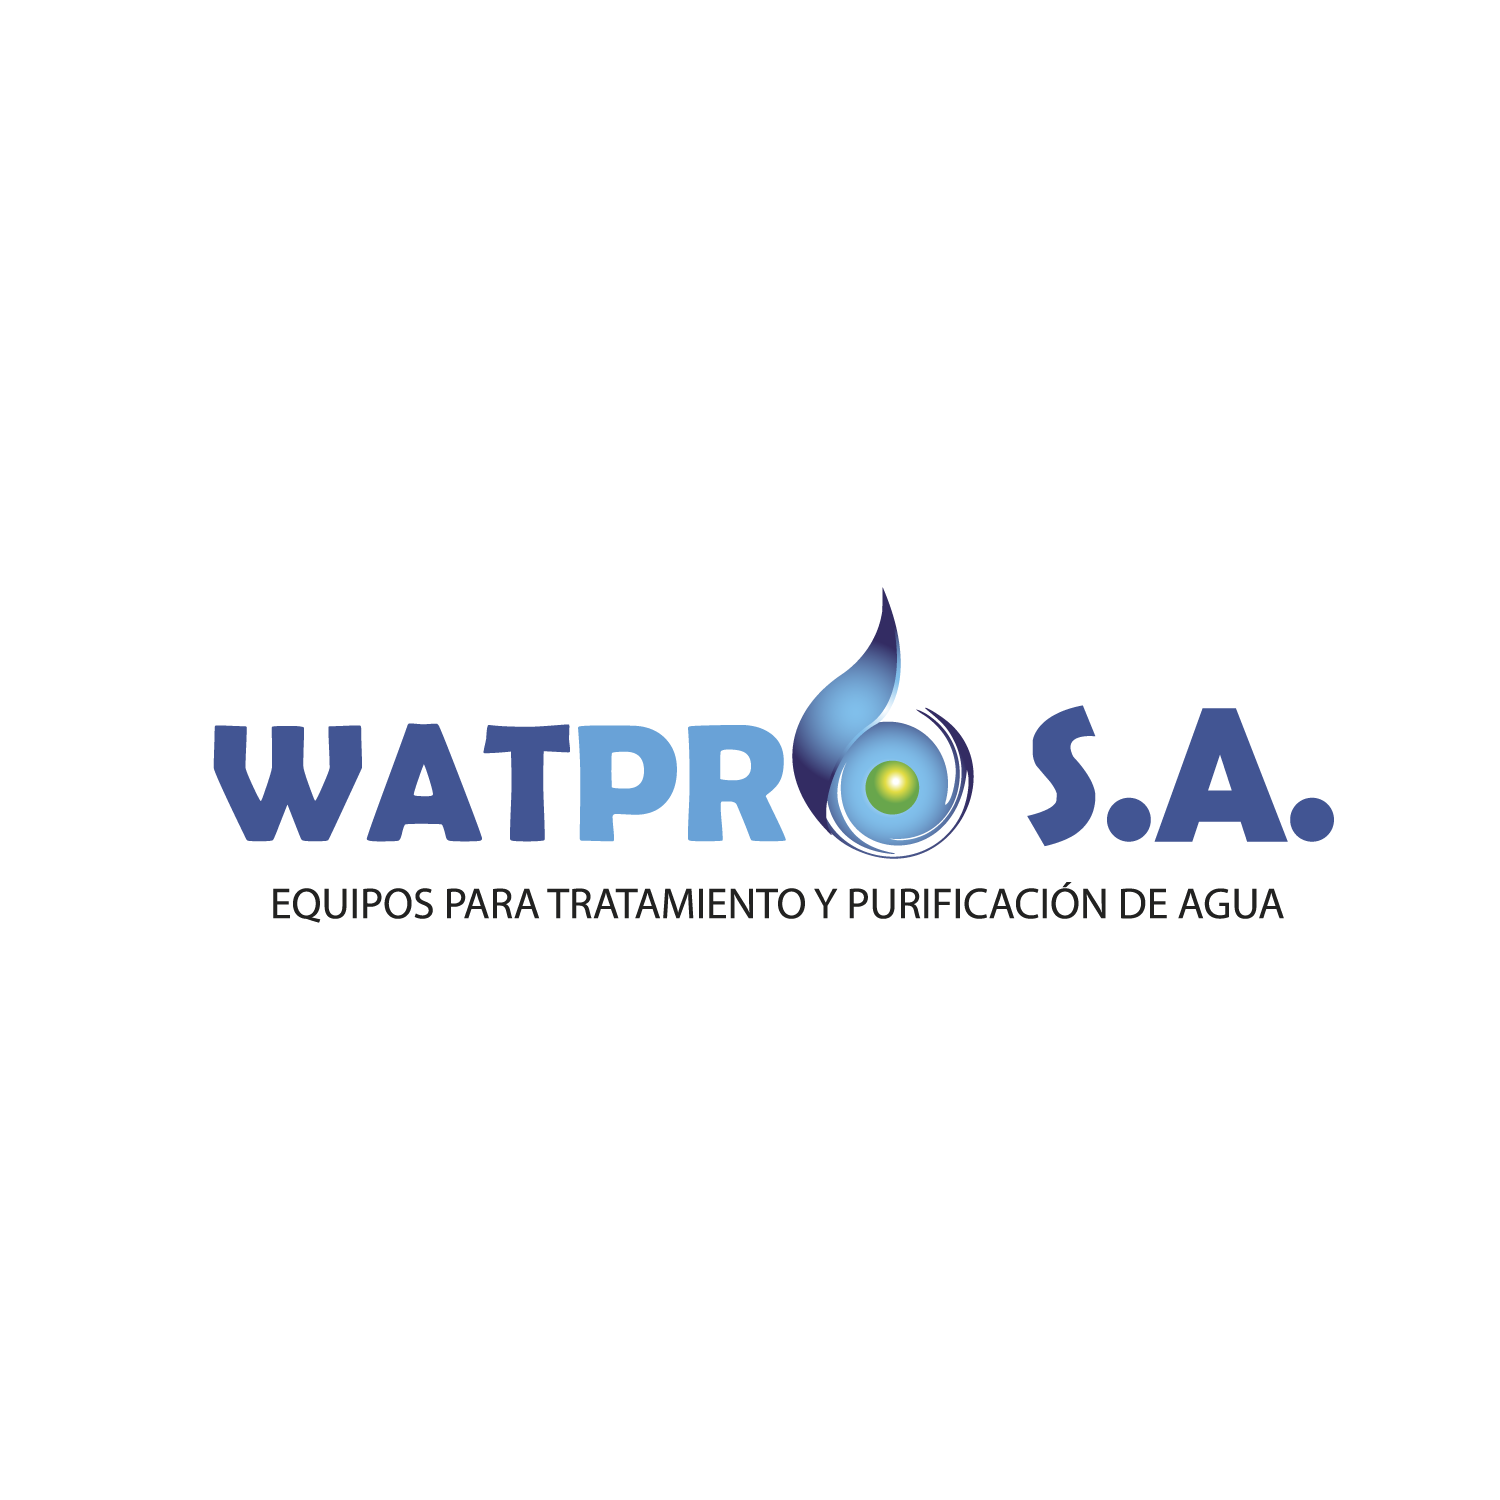 bolsaempleopuce_waterpurificationprocesseswatprosa